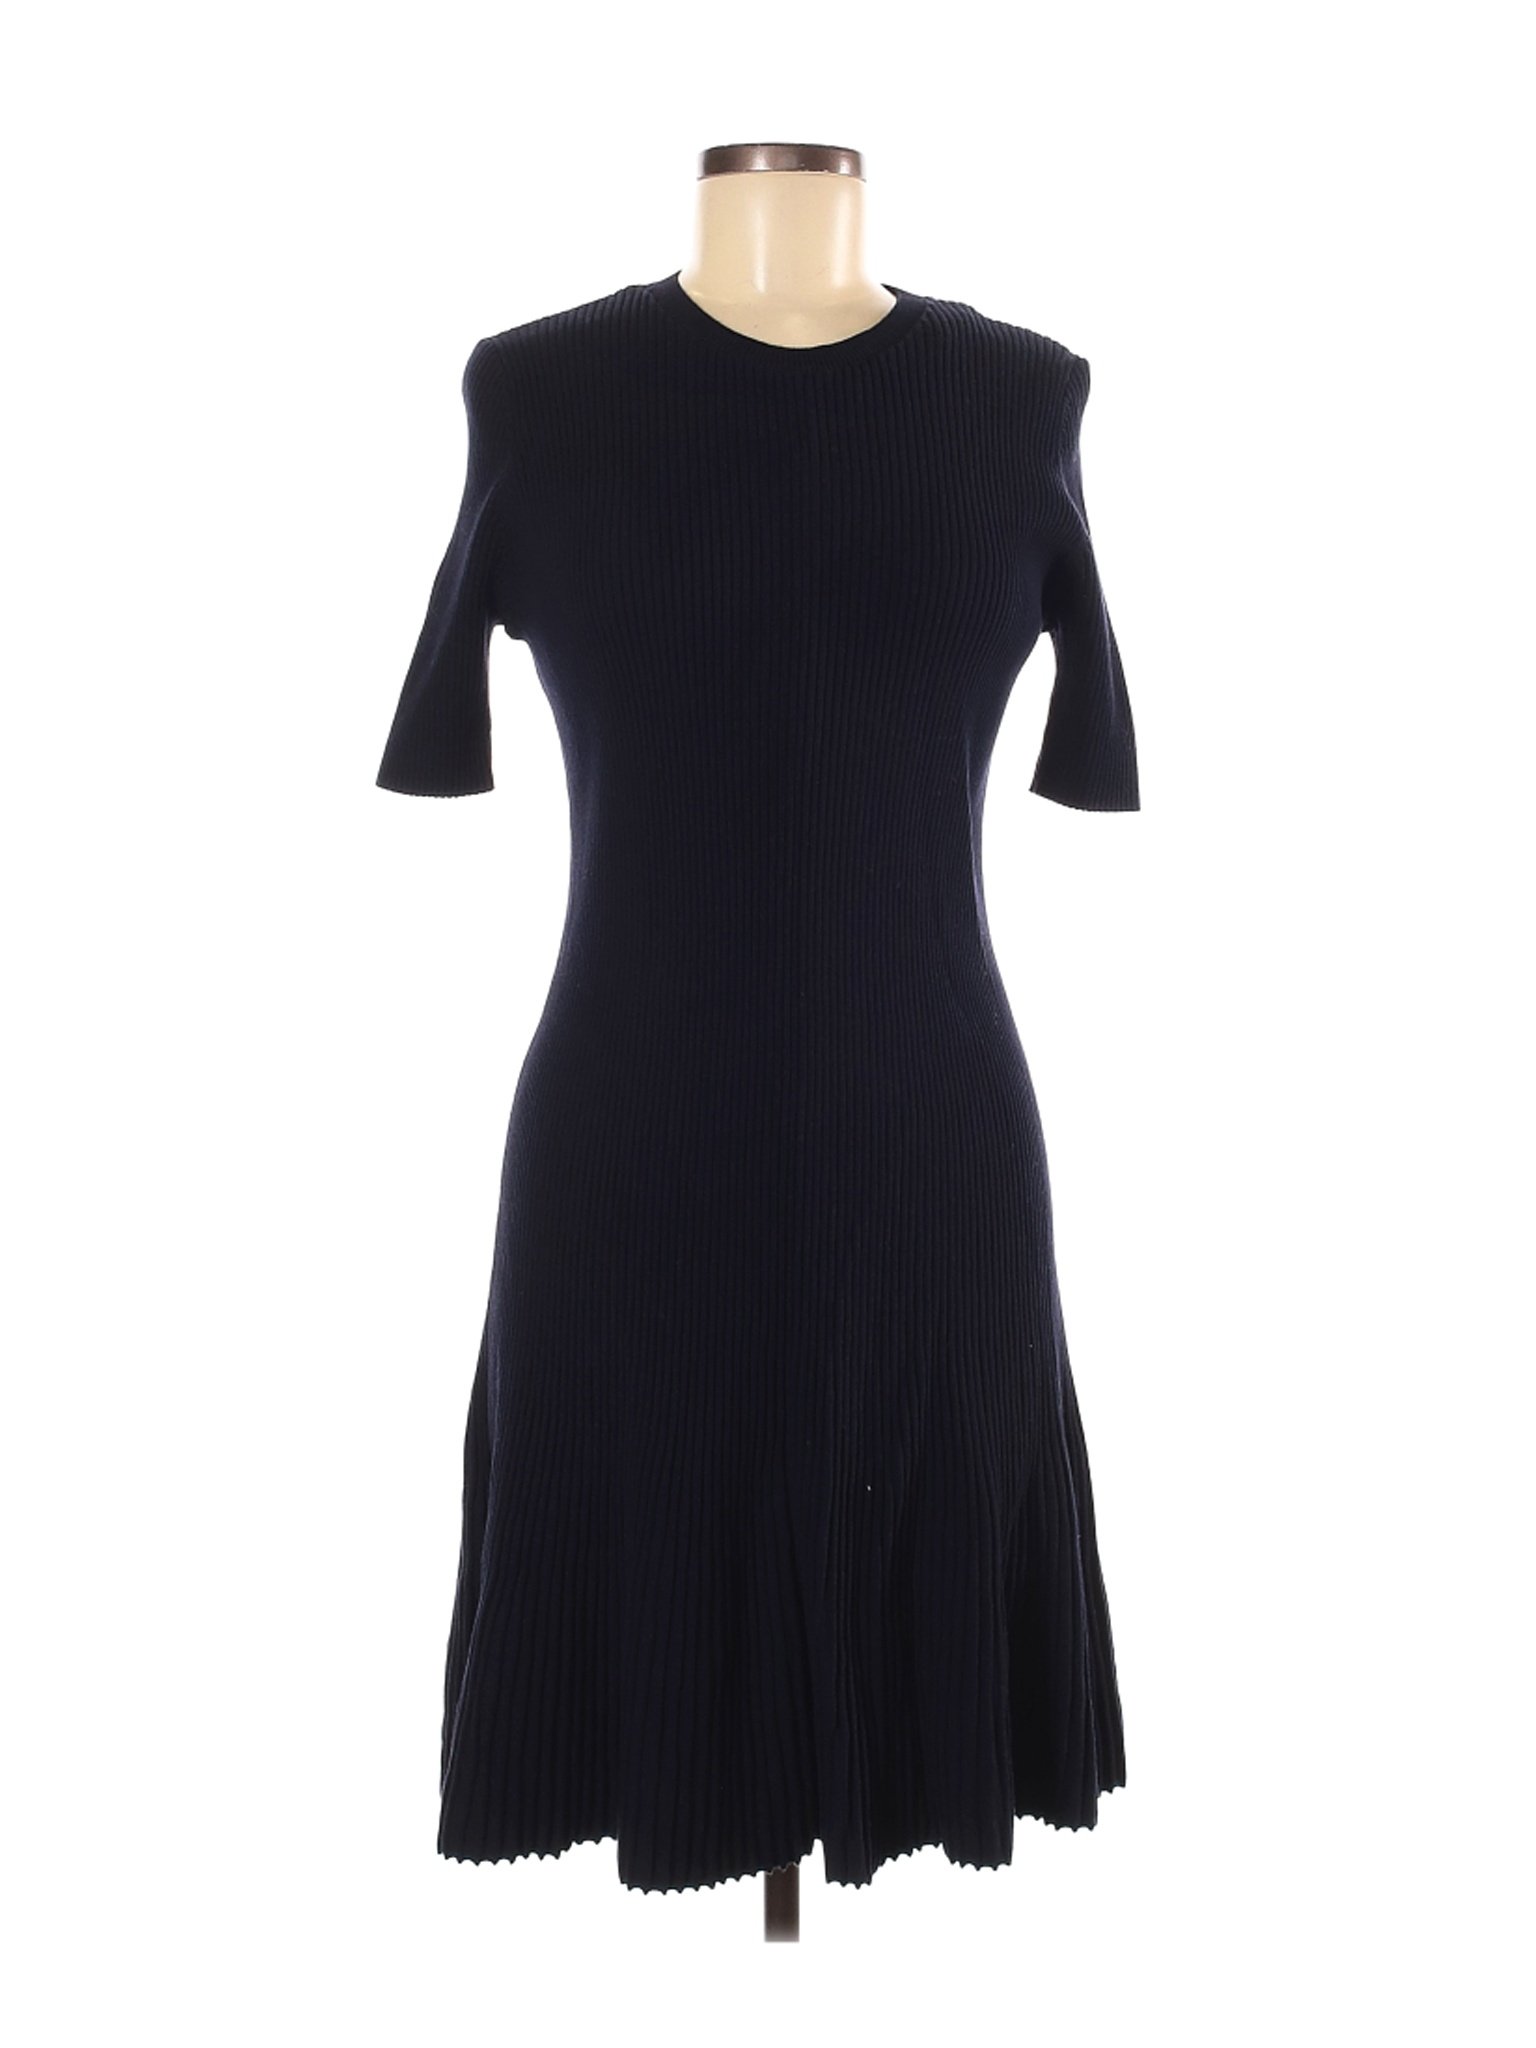 Cos Women Black Casual Dress M | eBay